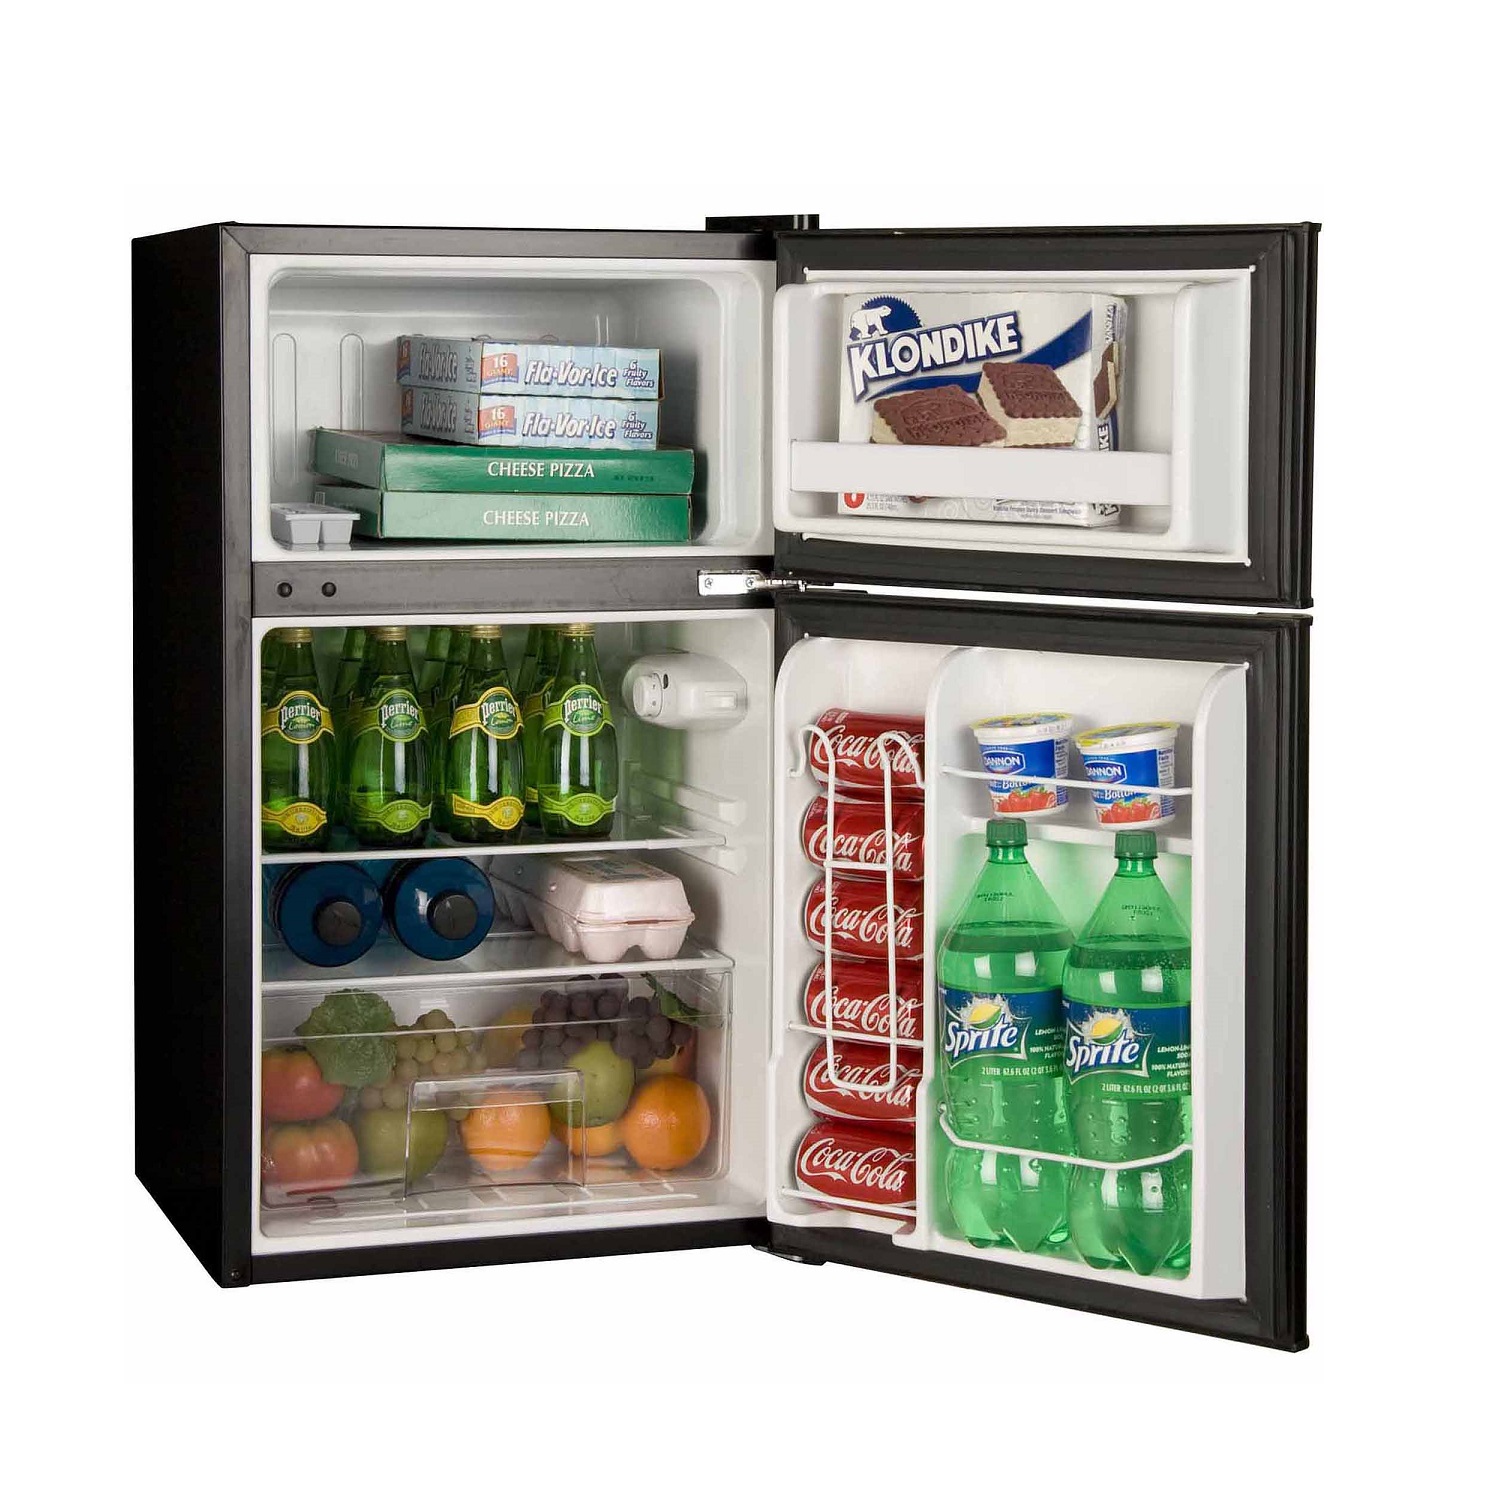 Haier 3.2 Cu Ft Two Door Refrigerator with Freezer HC32TW10SB, Black - image 3 of 4